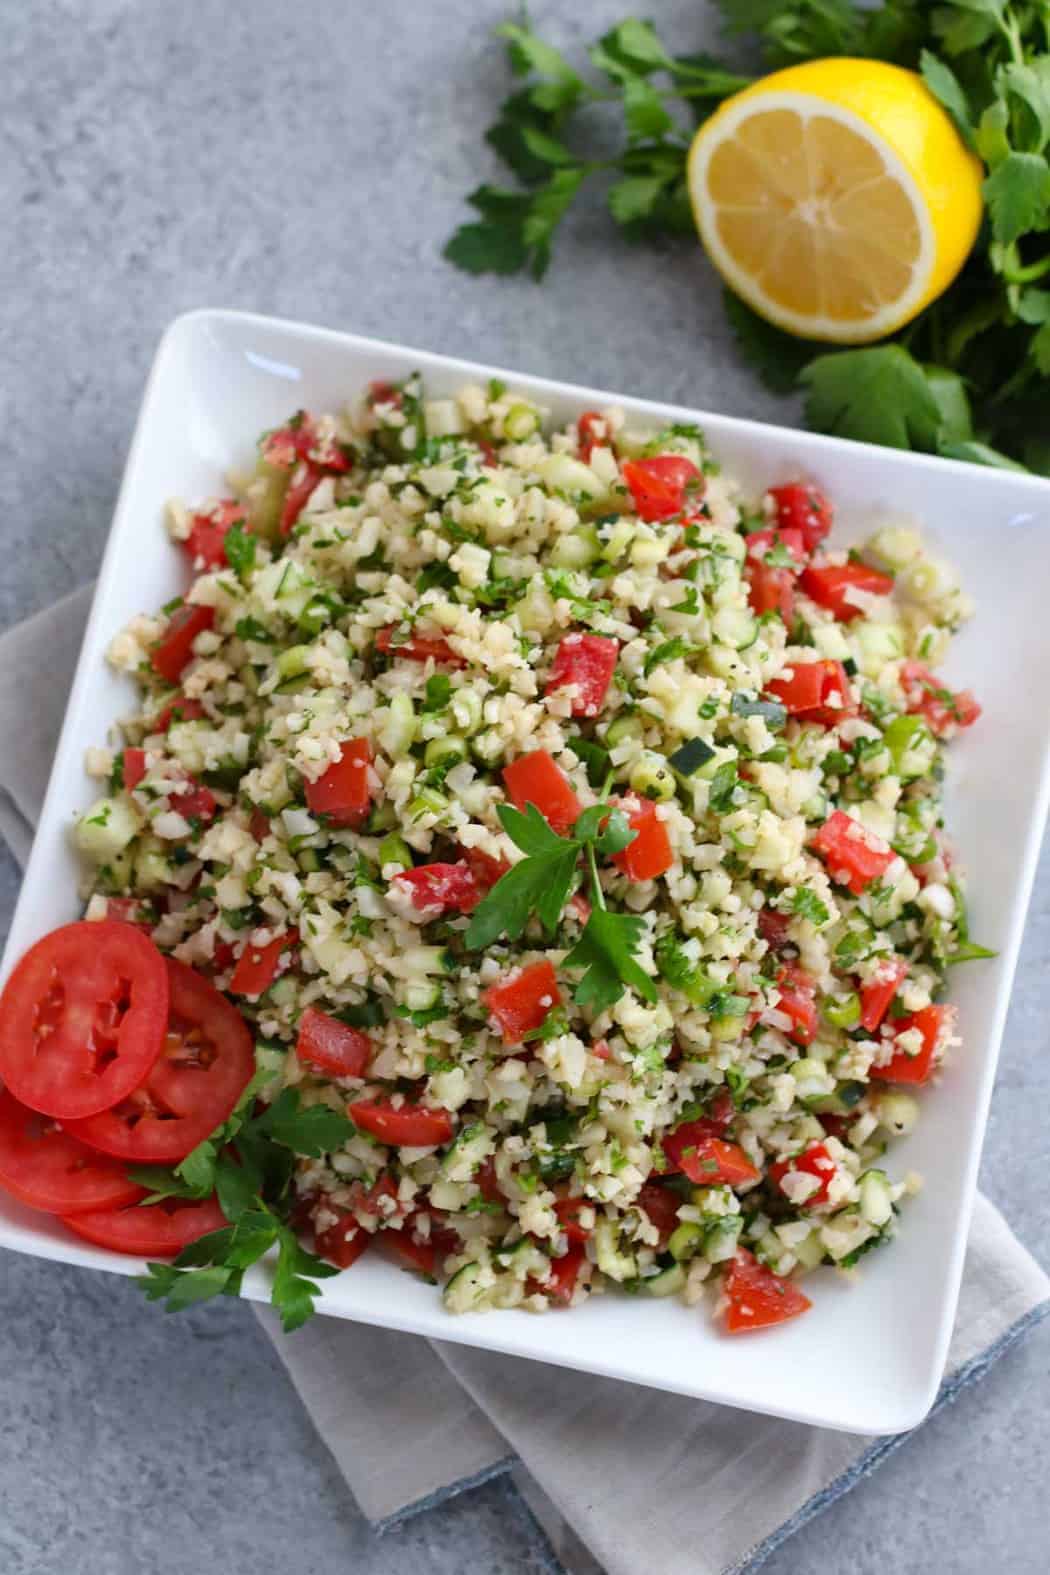 Cauliflower Tabbouleh Salad | The Real Food Dietitians | https://therealfooddietitians.com/cauliflower-tabbouleh-salad/